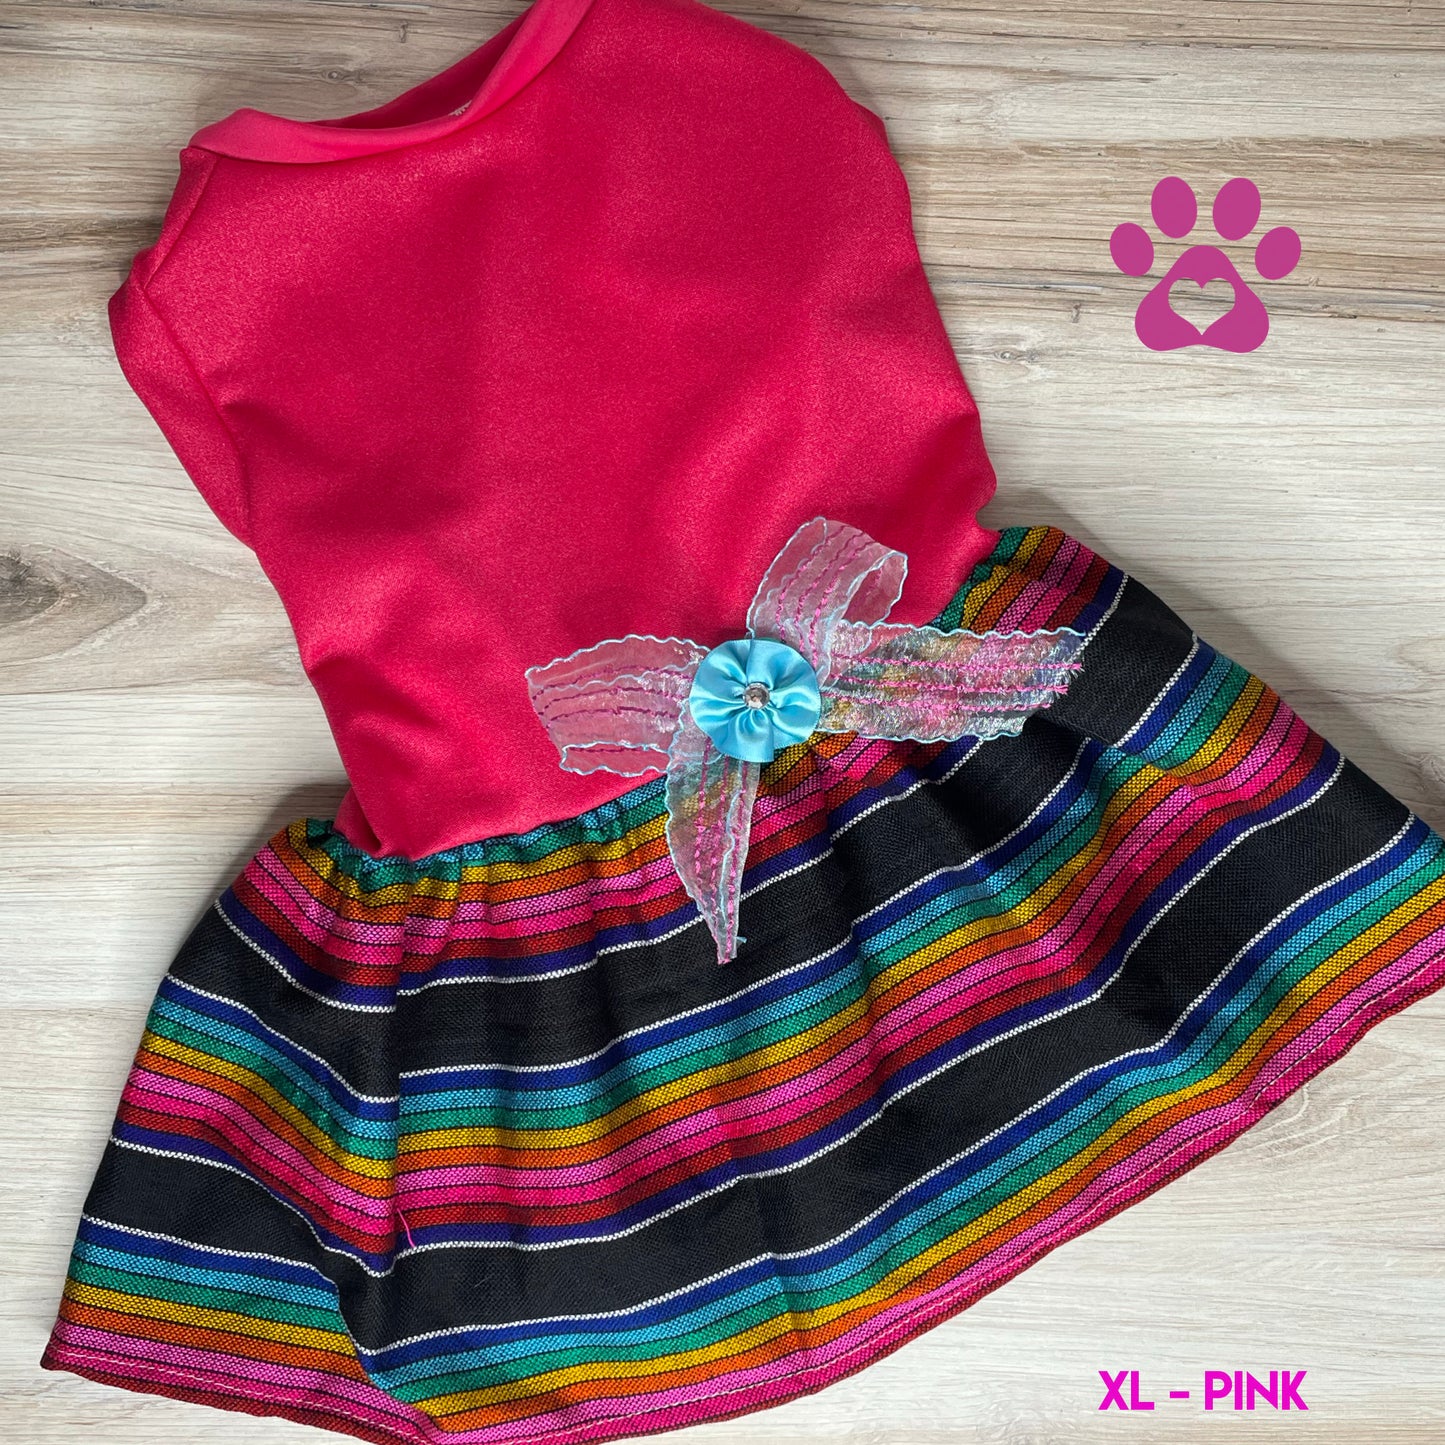 Robe pour chien de style mexicain - Cambaya